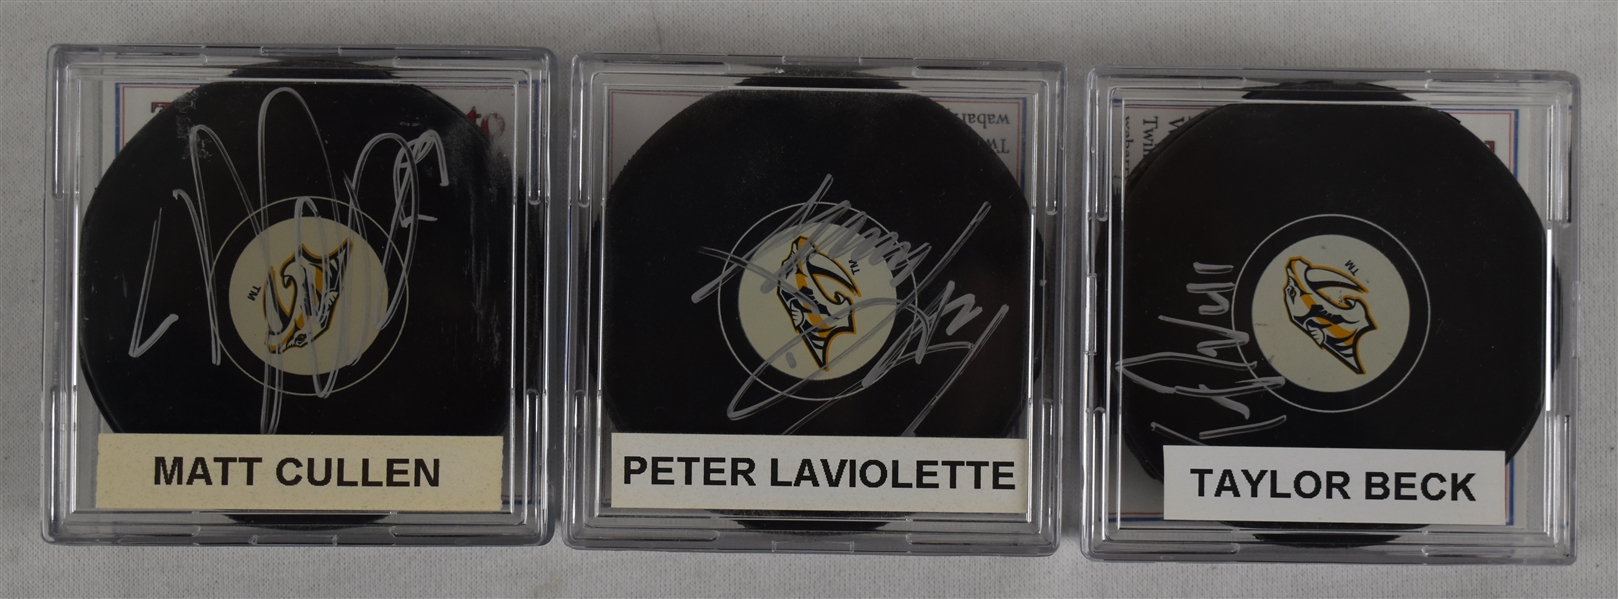 Laviolette Cullen & Beck Lot of 3 Autographed Hockey Pucks w/Case